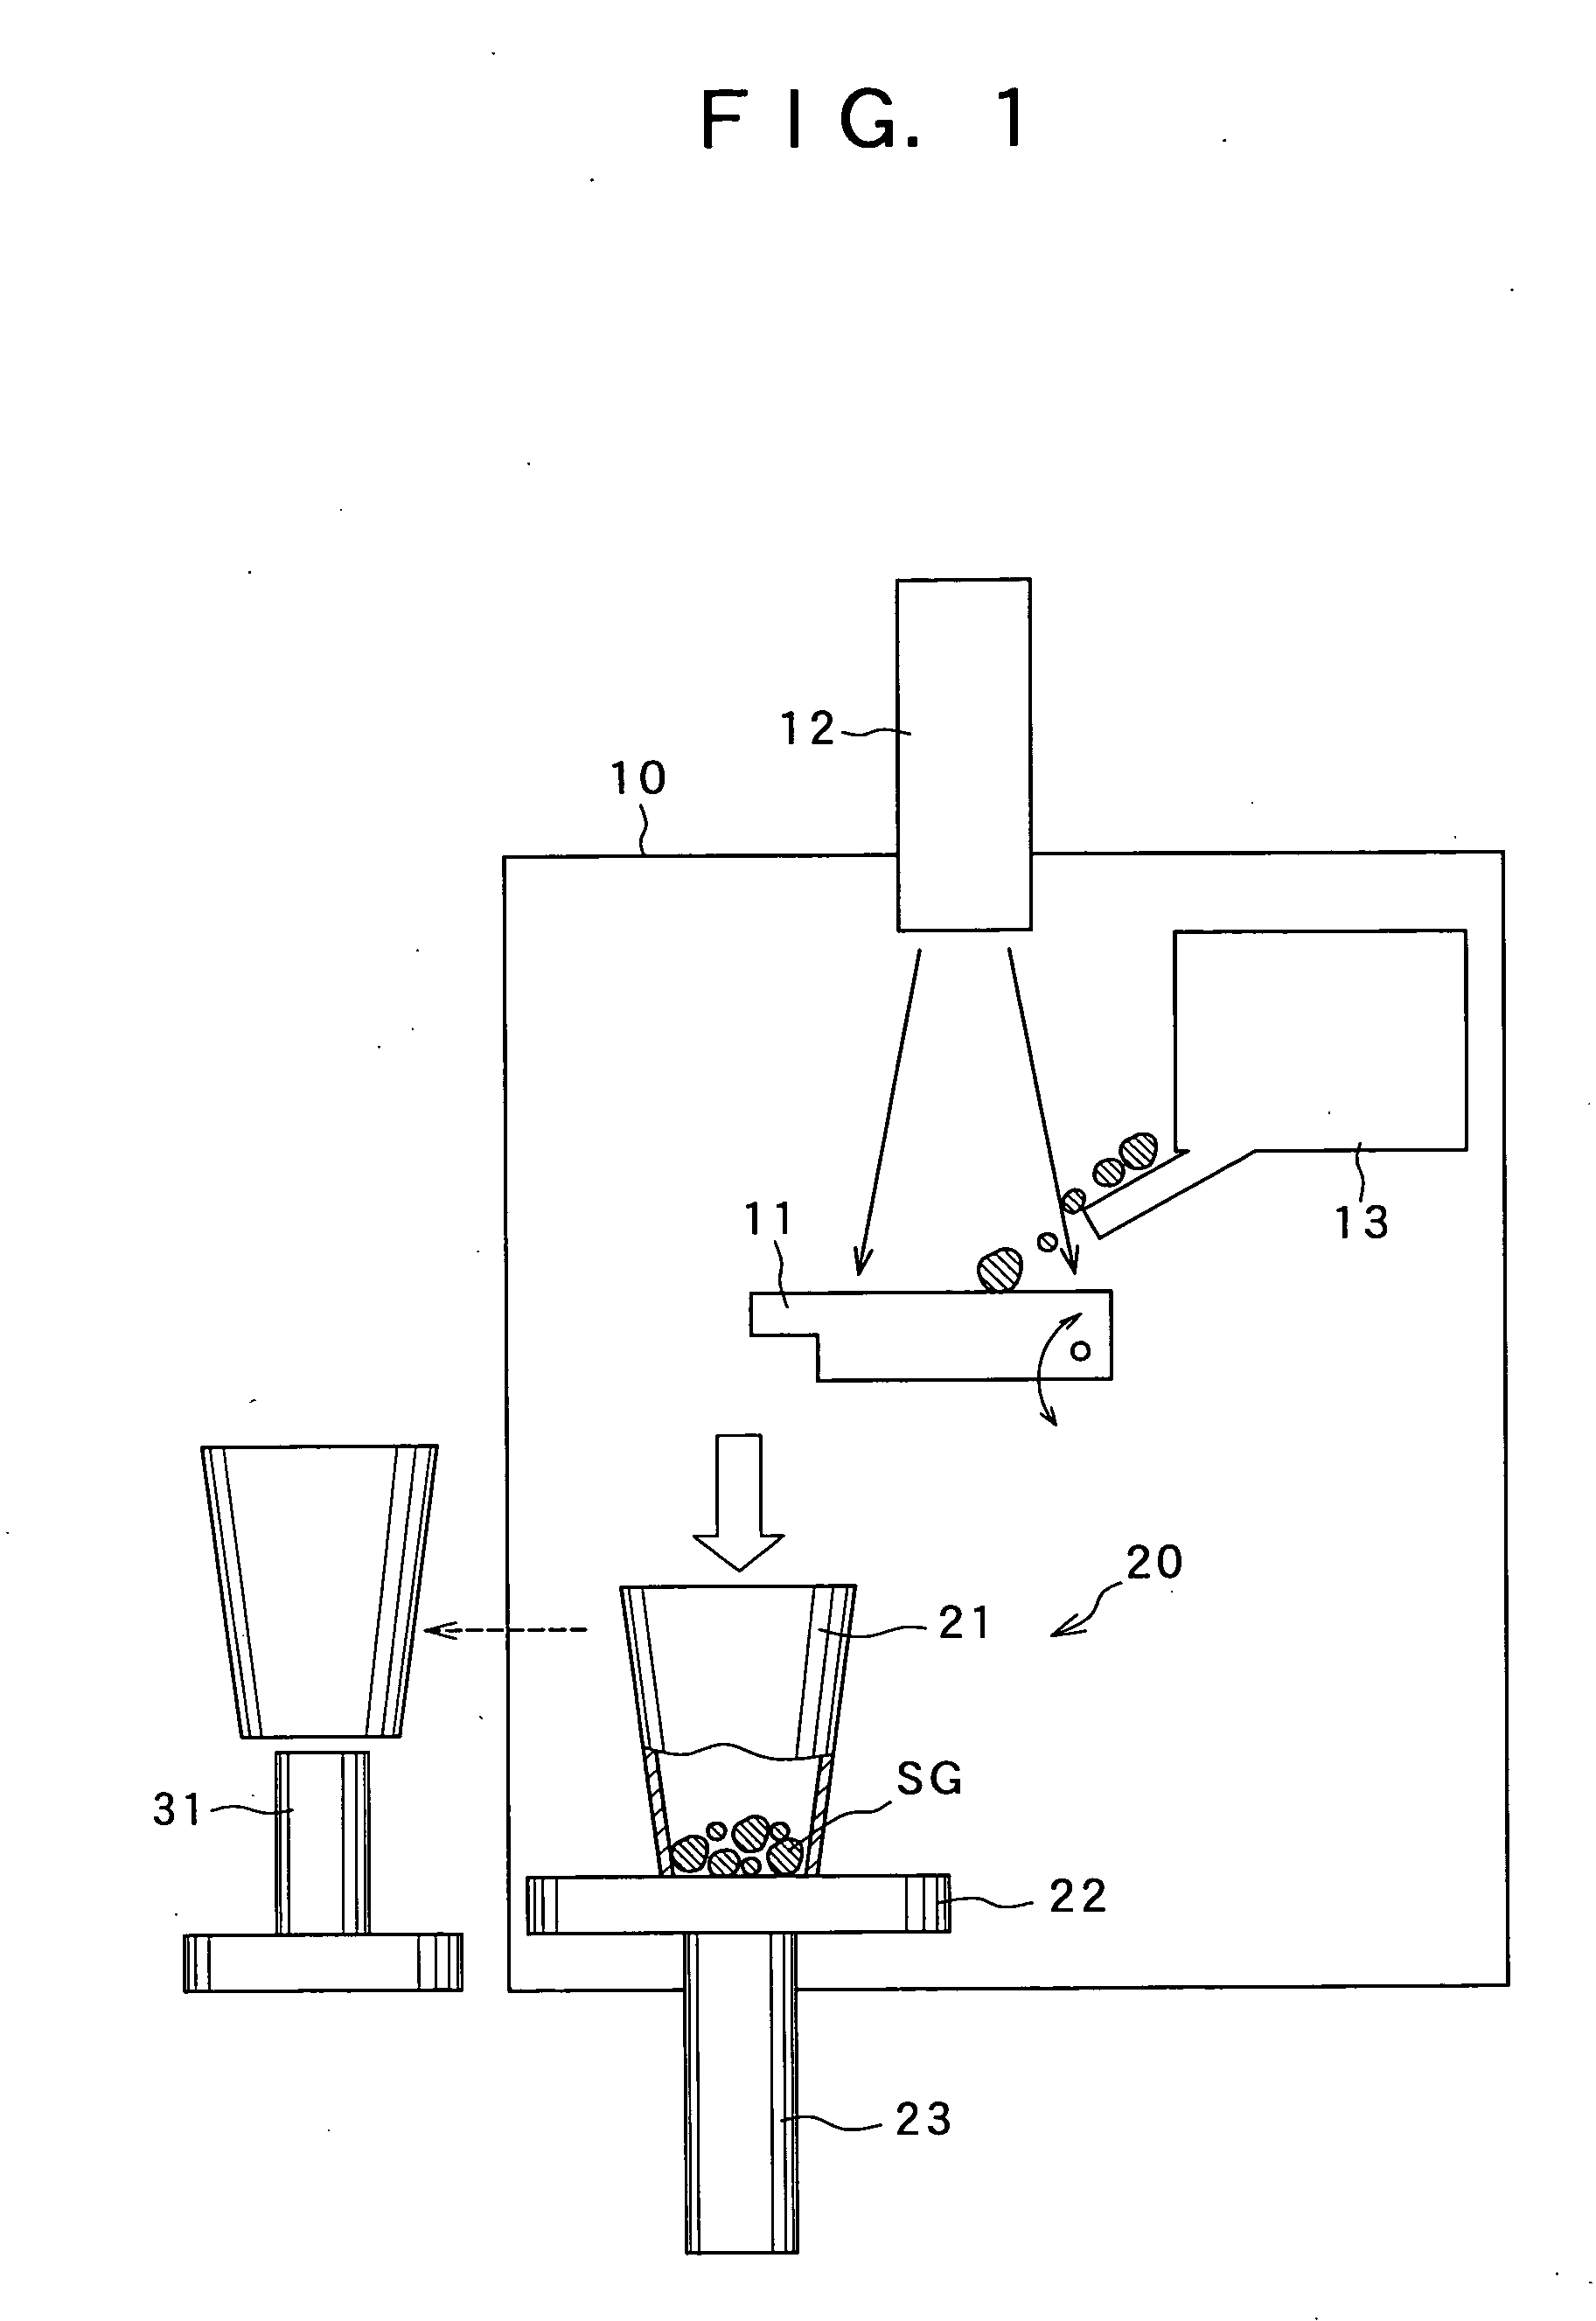 Crucible apparatus and method of solidifying a molten material